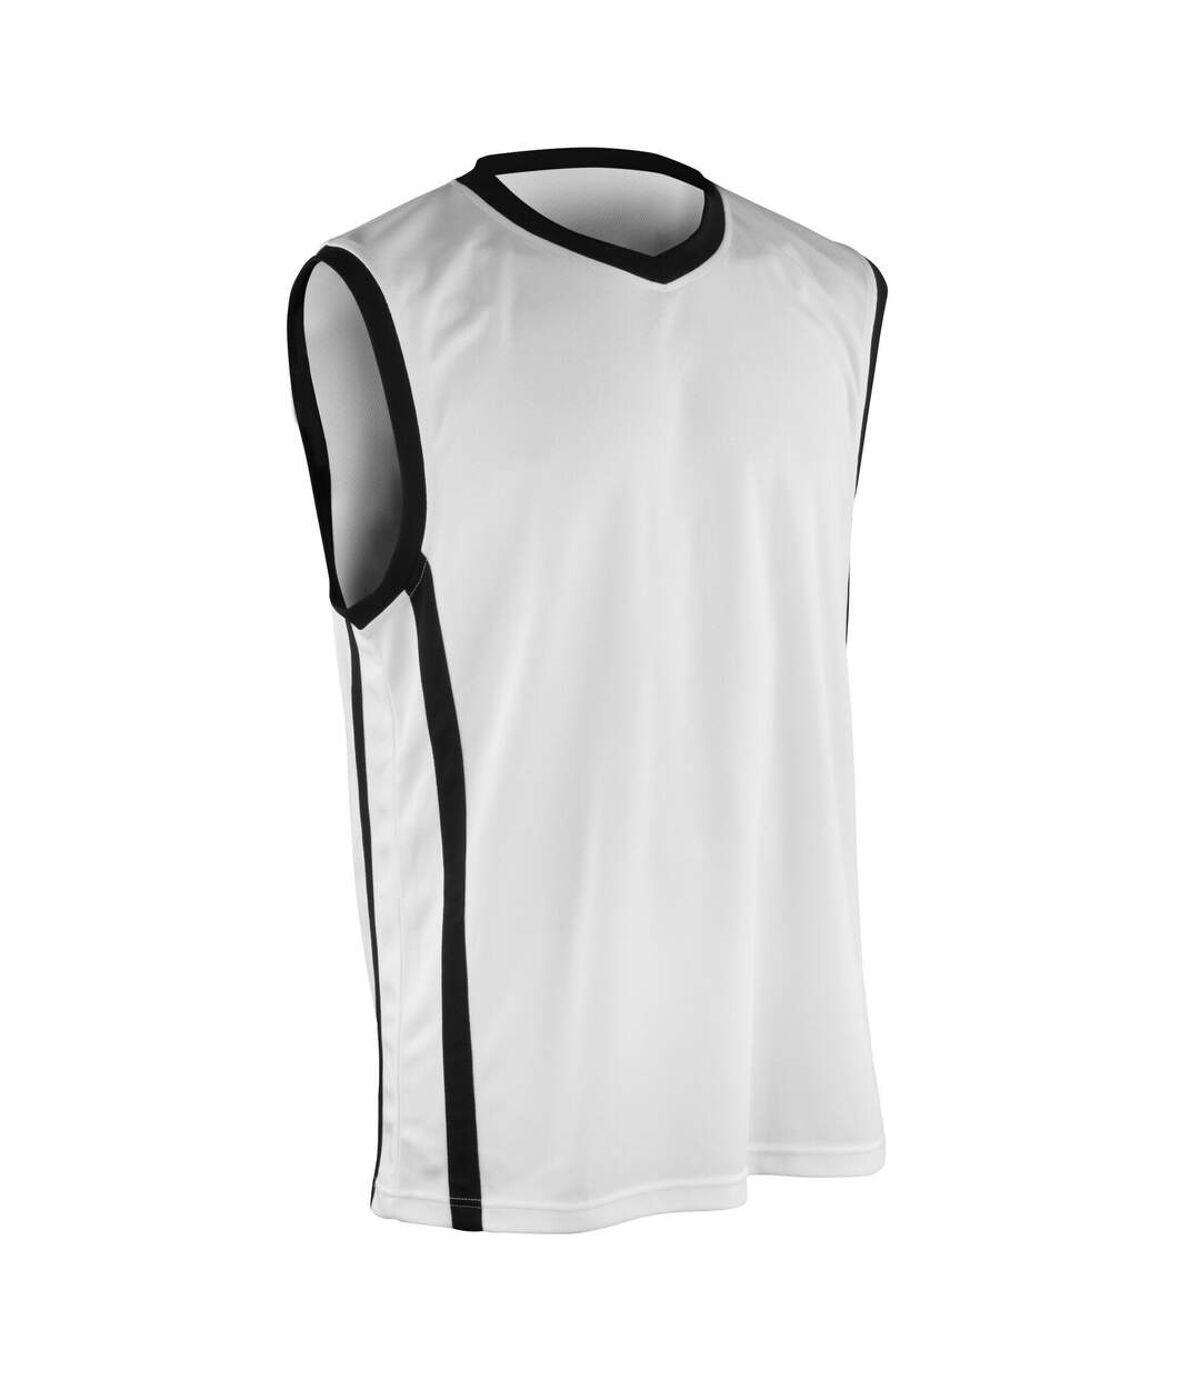 Spiro Mens Basketball Quick Dry Sleeveless Top (White / Black) - UTRW4778